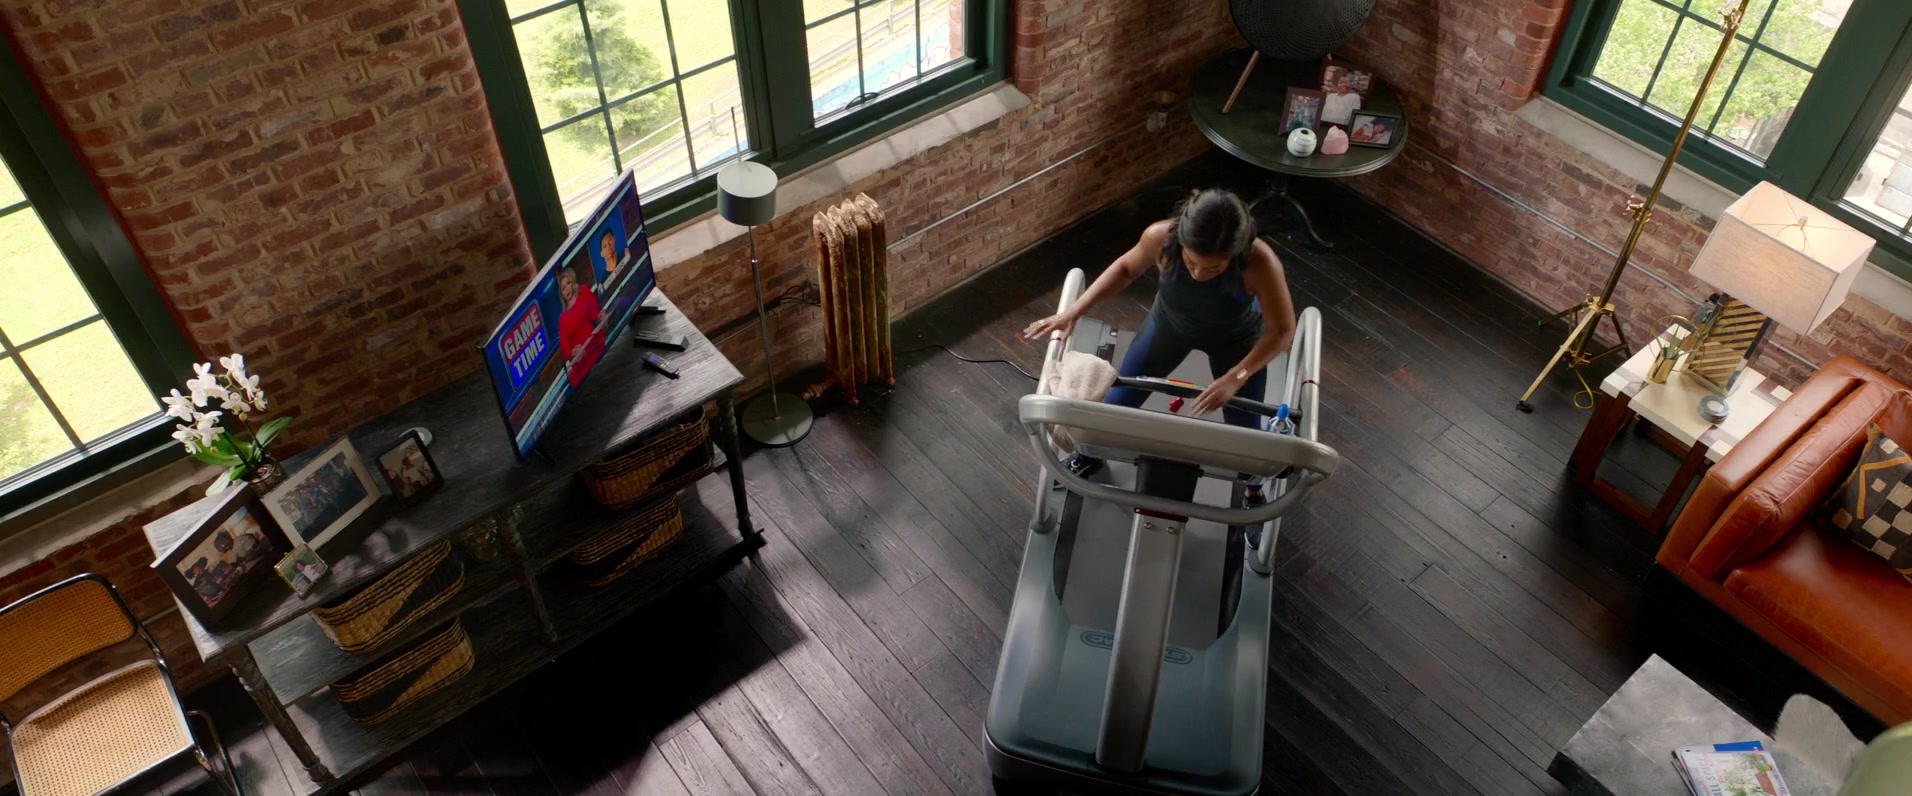 Star Trac Treadmill Used by Taraji P. Henson in What Men Want (2019) Movie1912 x 796